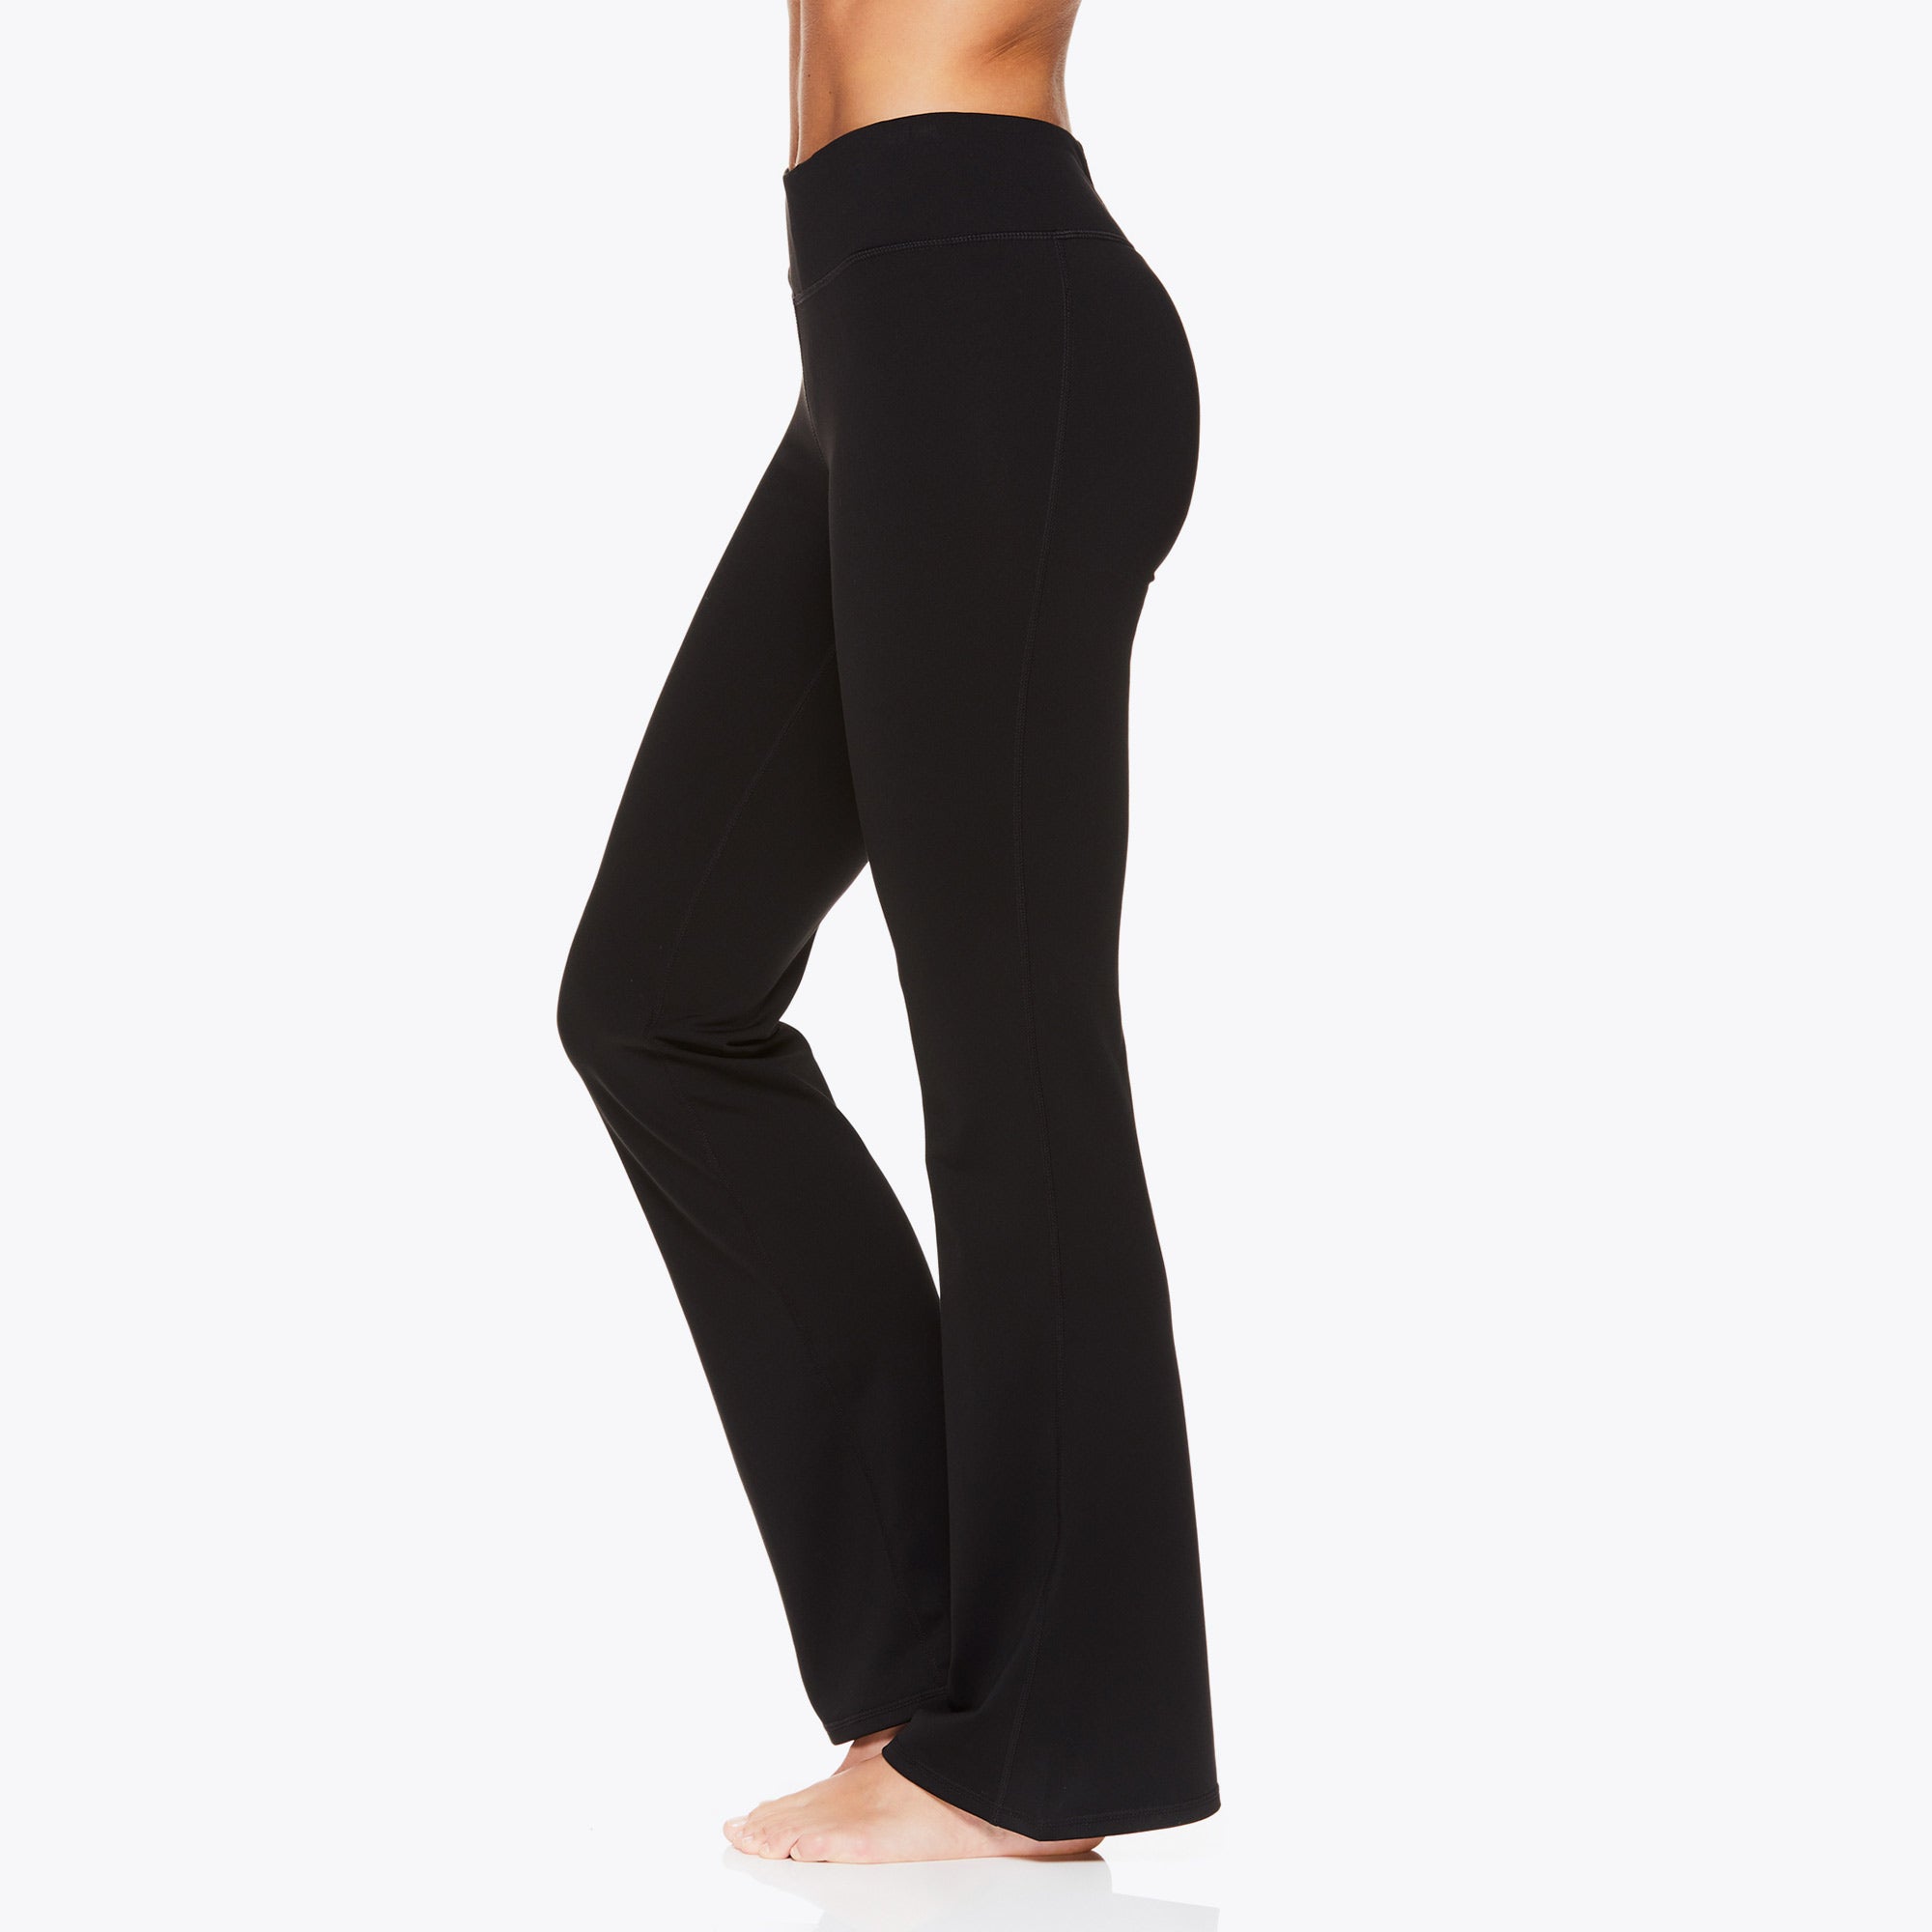 spandex yoga bootcut pants